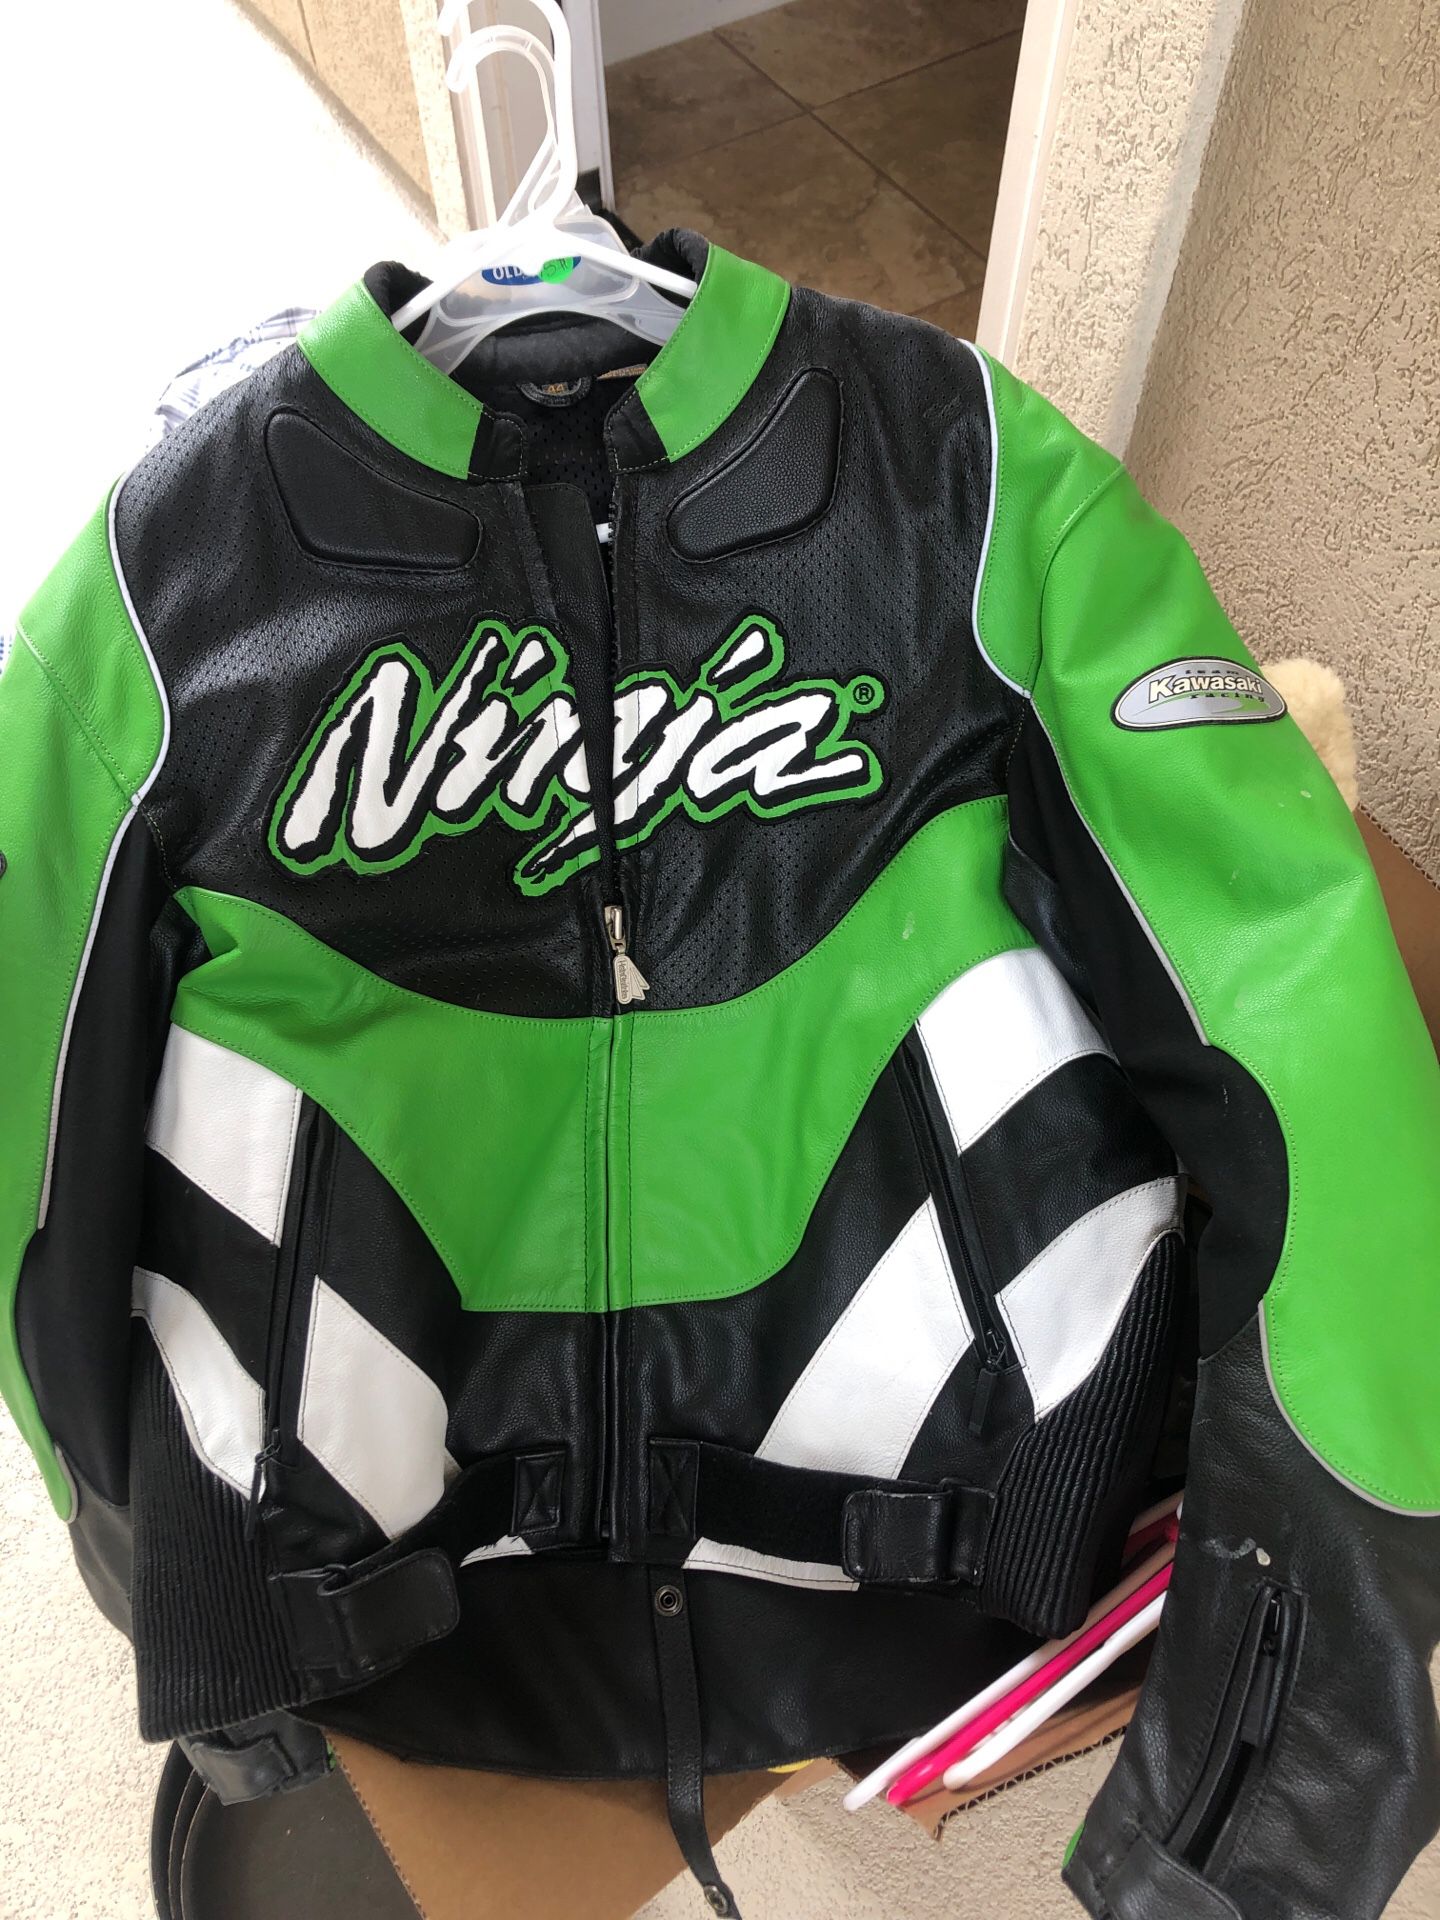 Xl ninja sports bike motorcycle bike jacket and protective gear